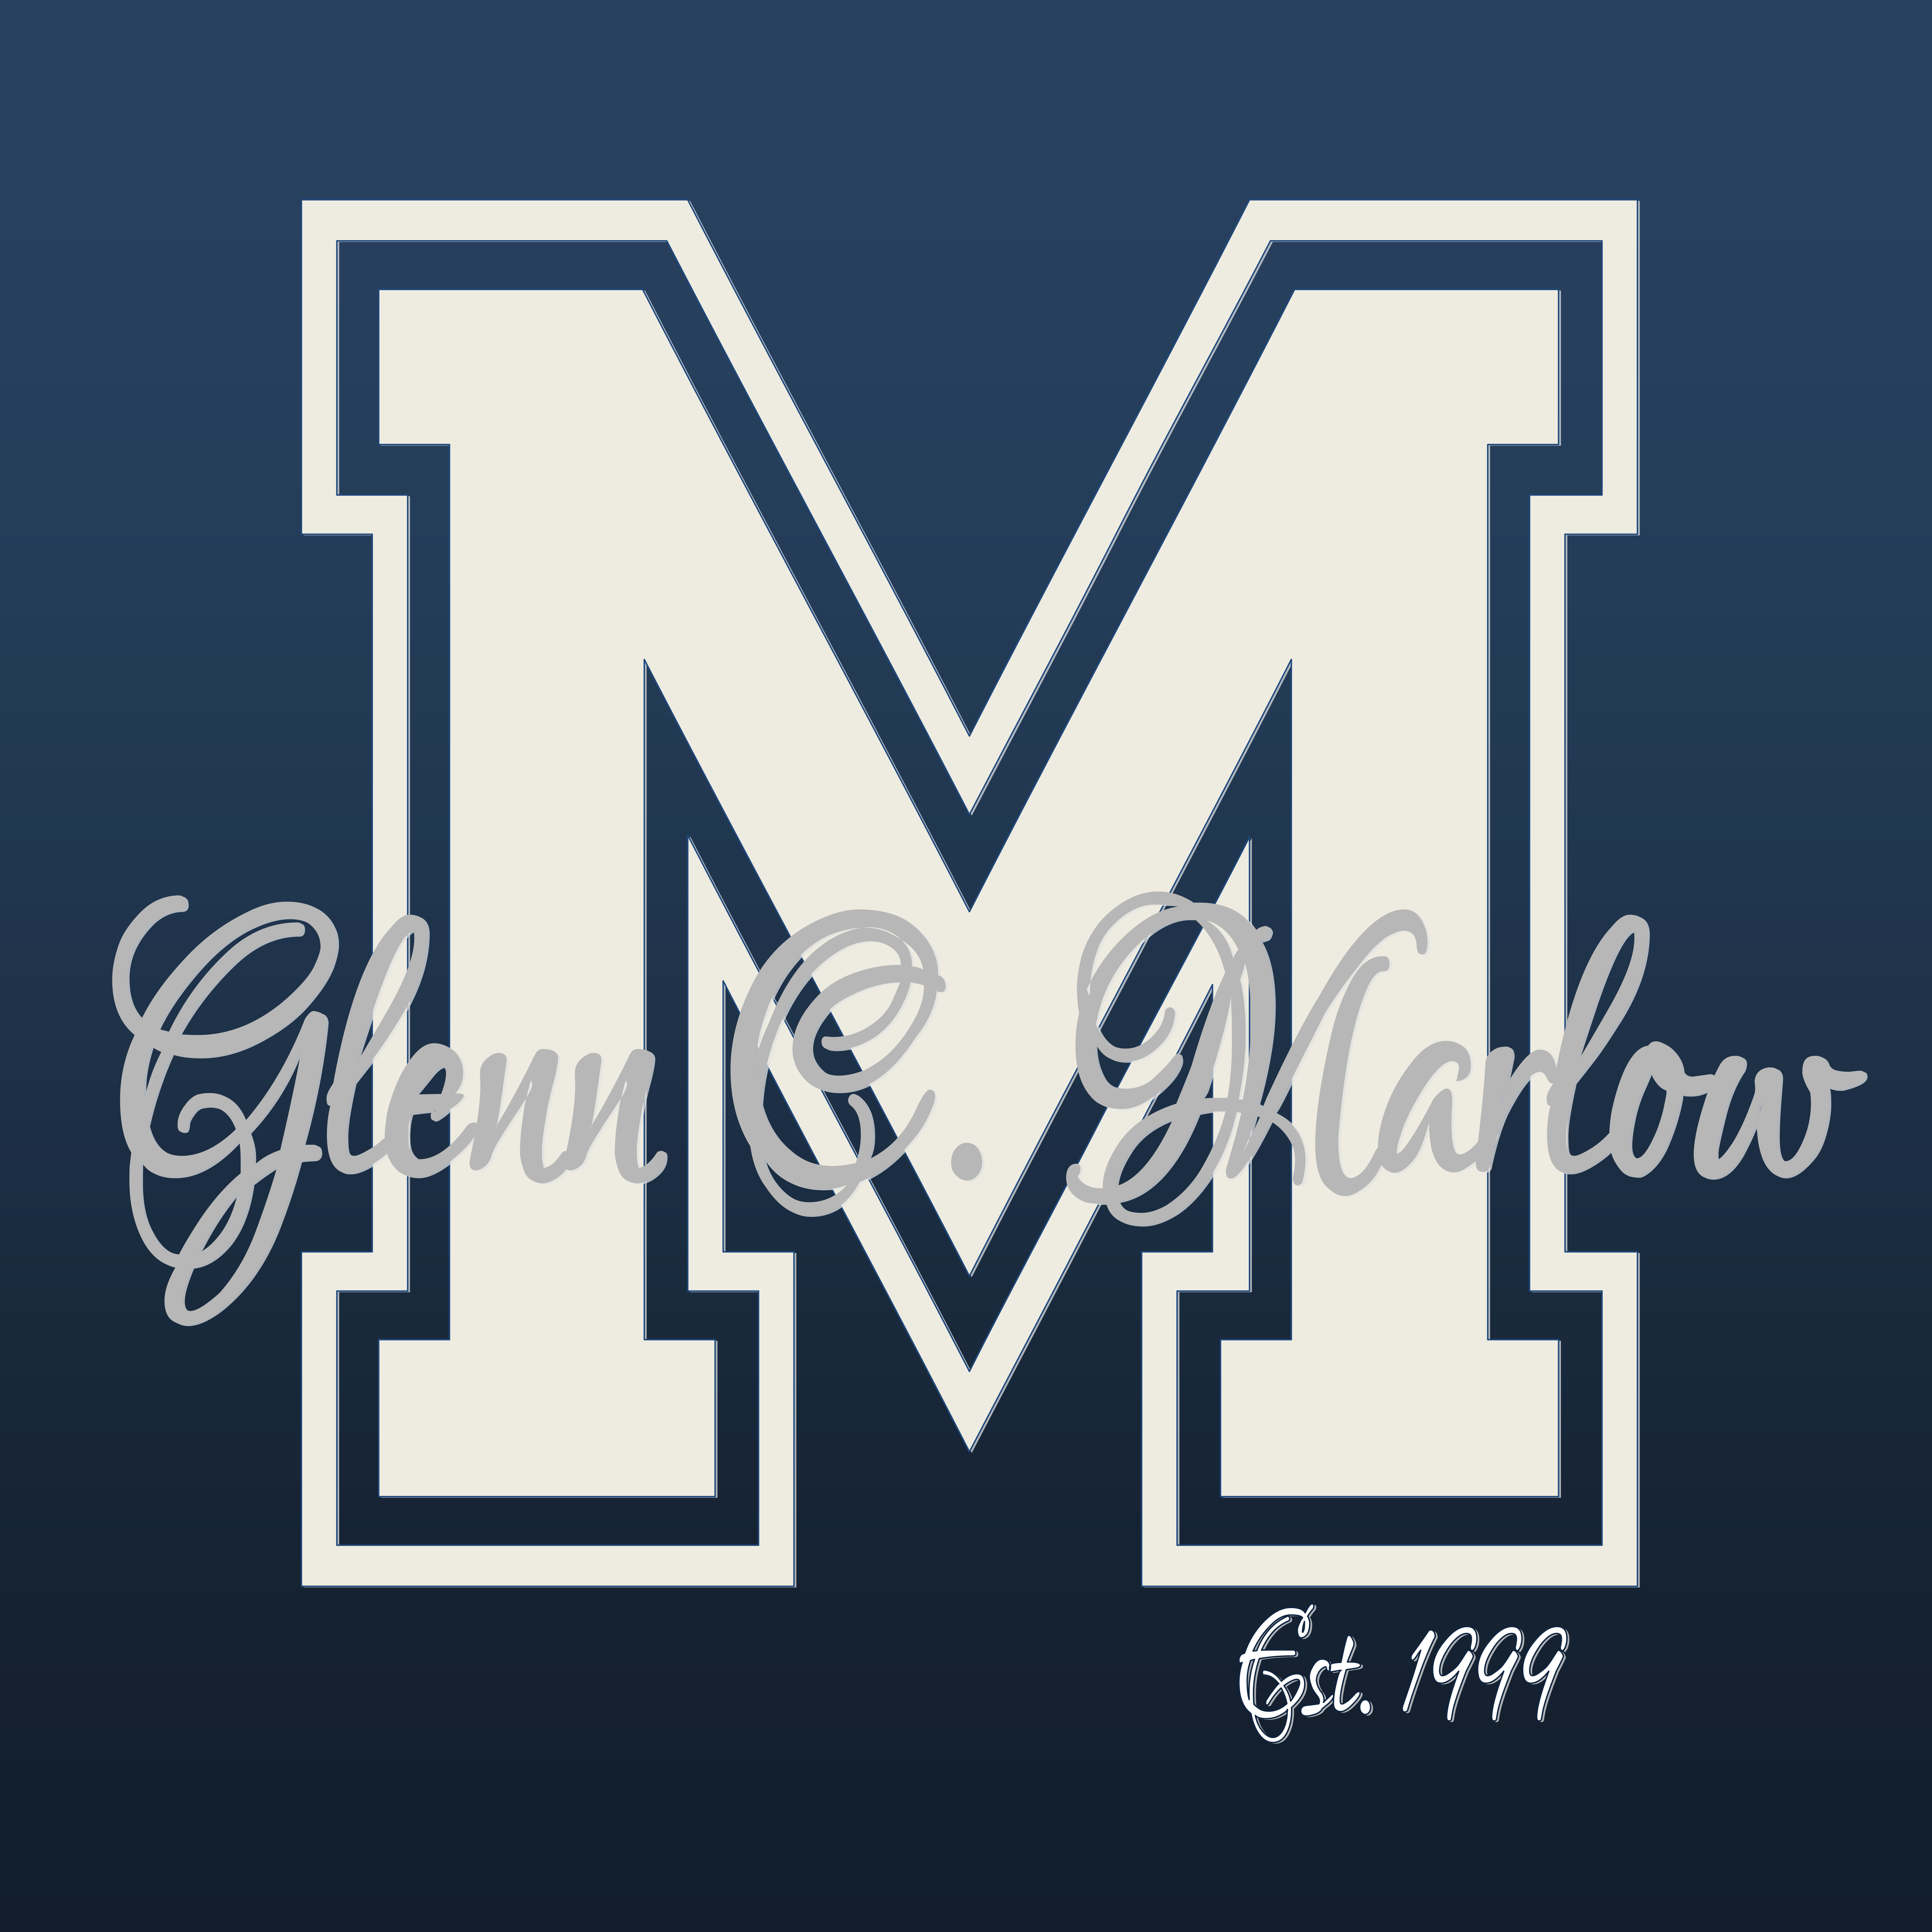 Glenn C. Marlow Elementary Logo